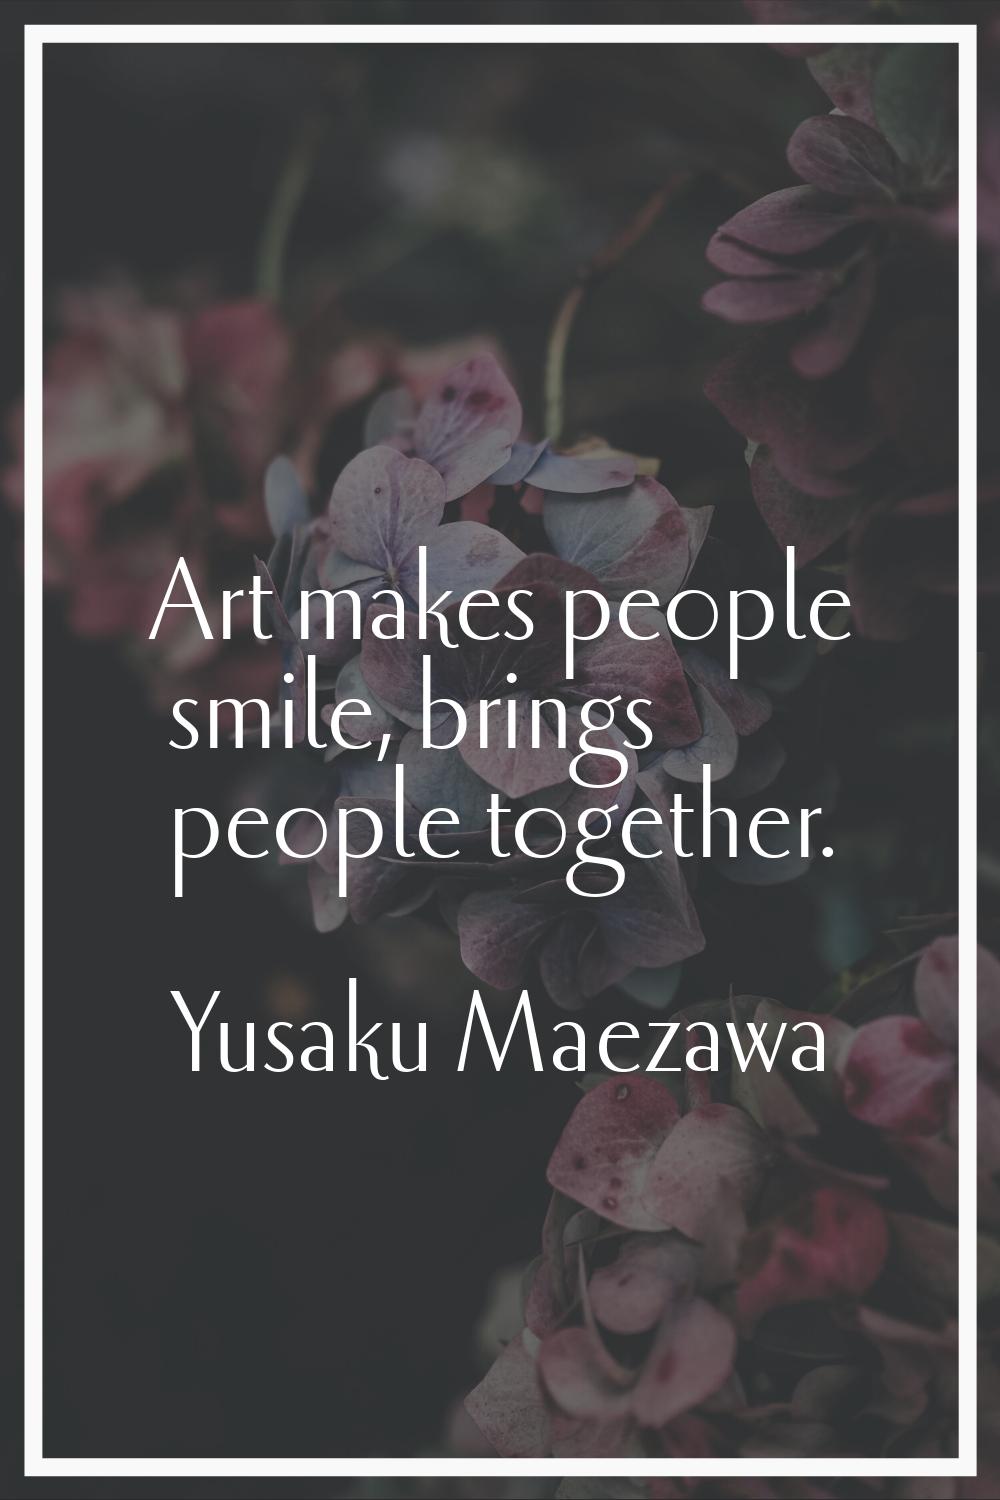 Art makes people smile, brings people together.